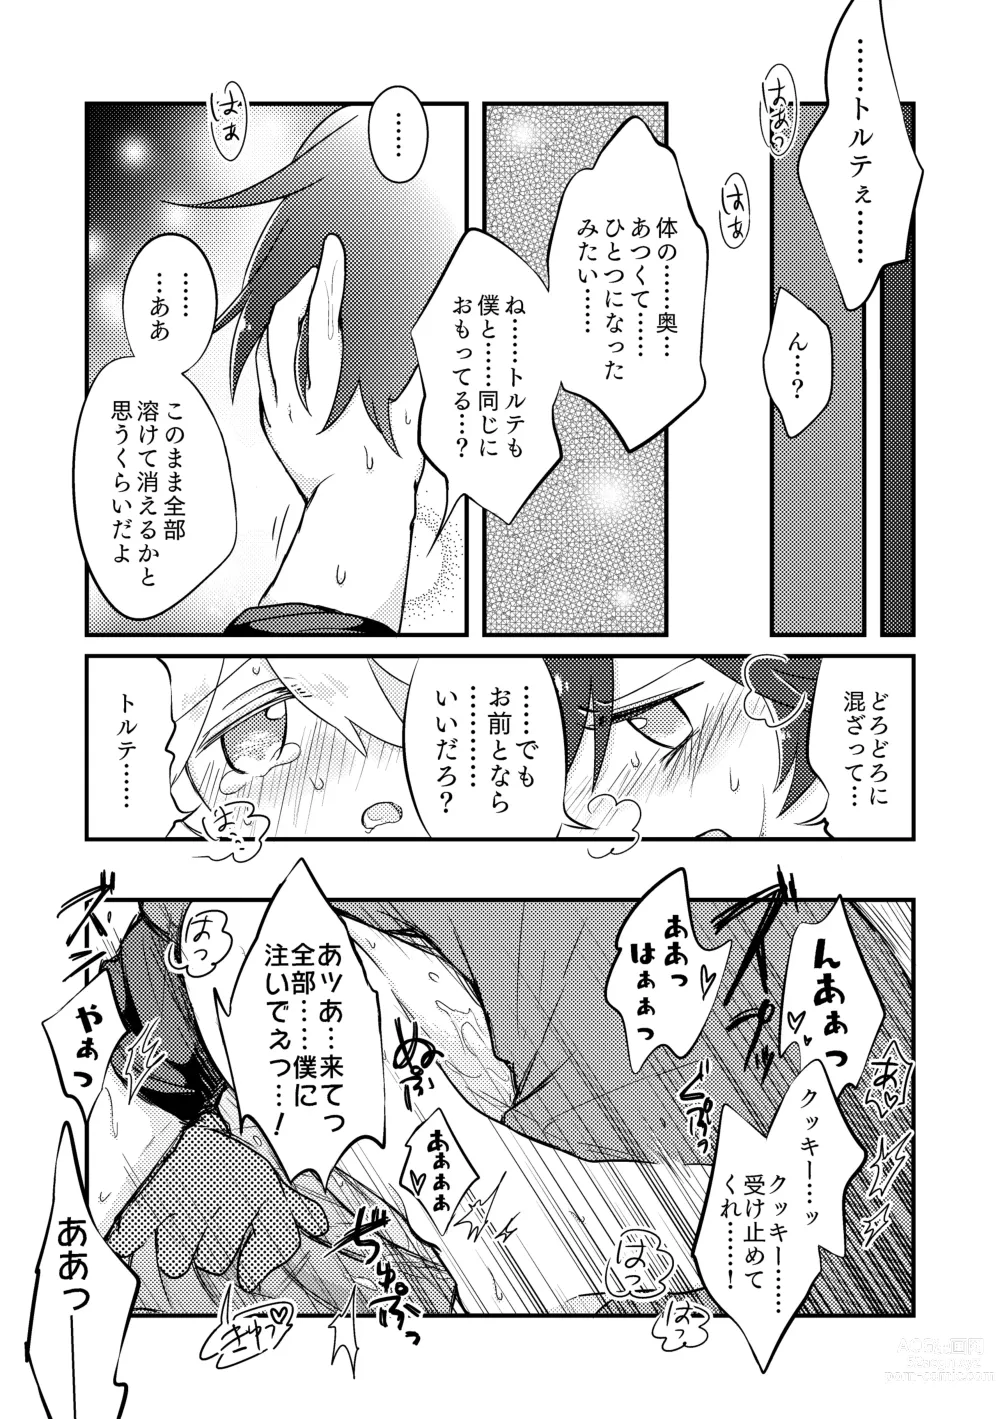 Page 23 of doujinshi Enka